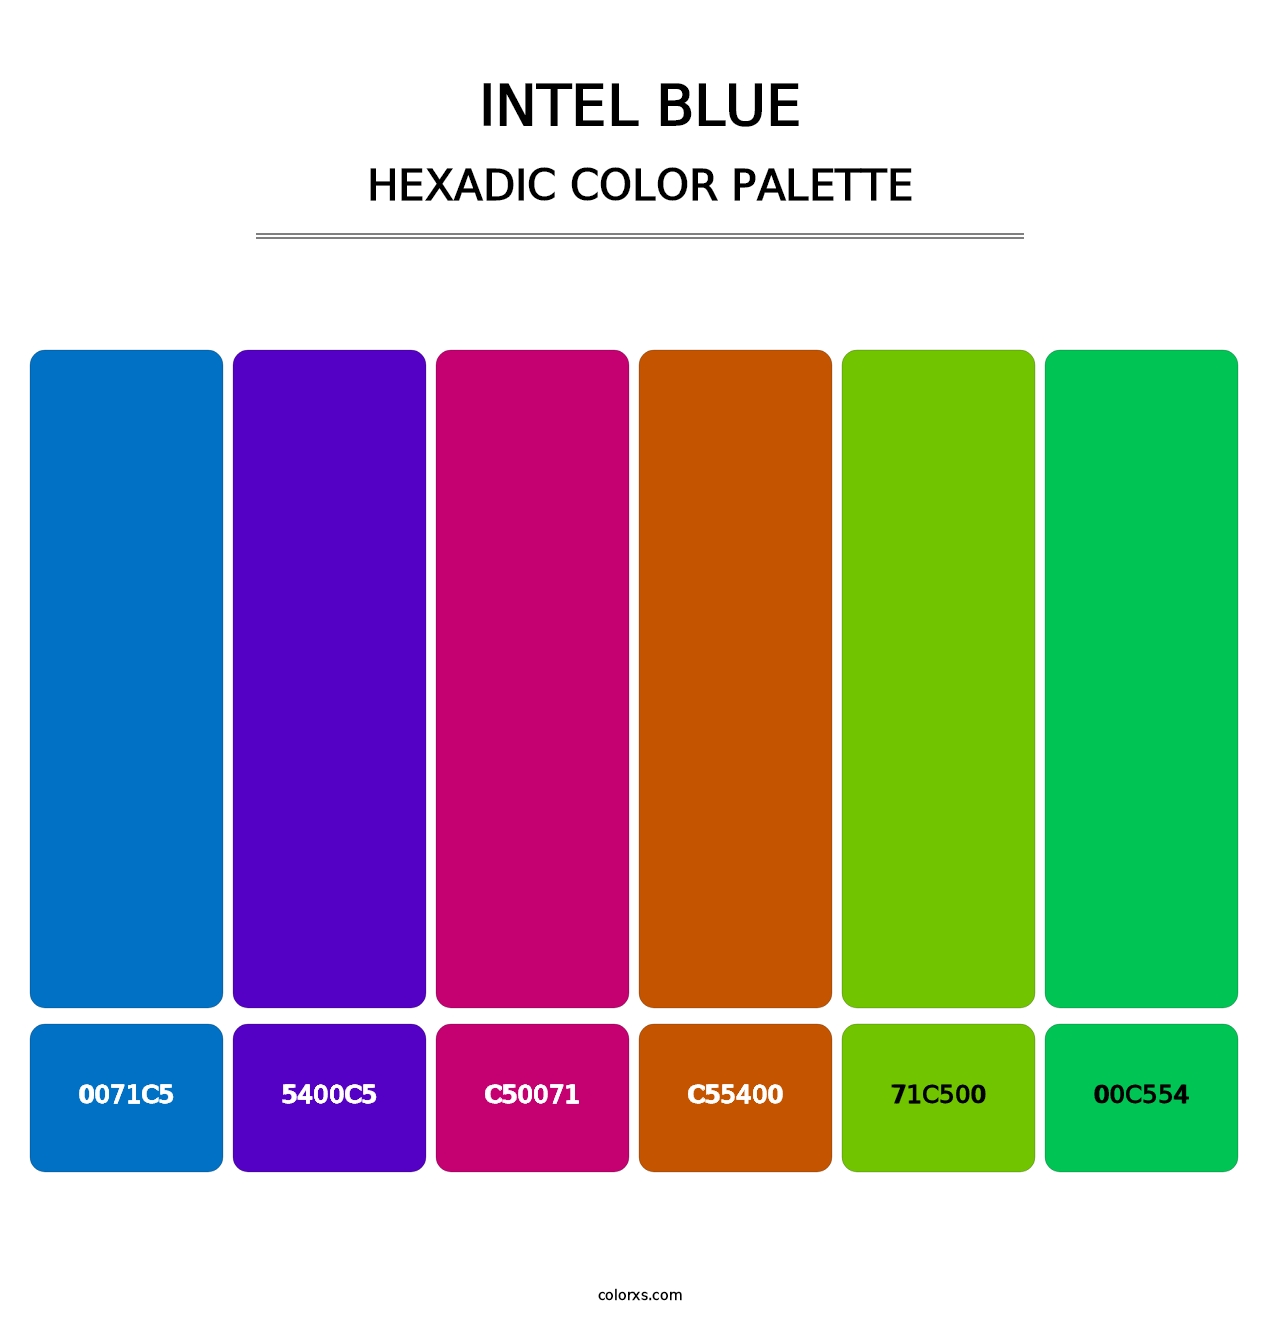 Intel Blue - Hexadic Color Palette